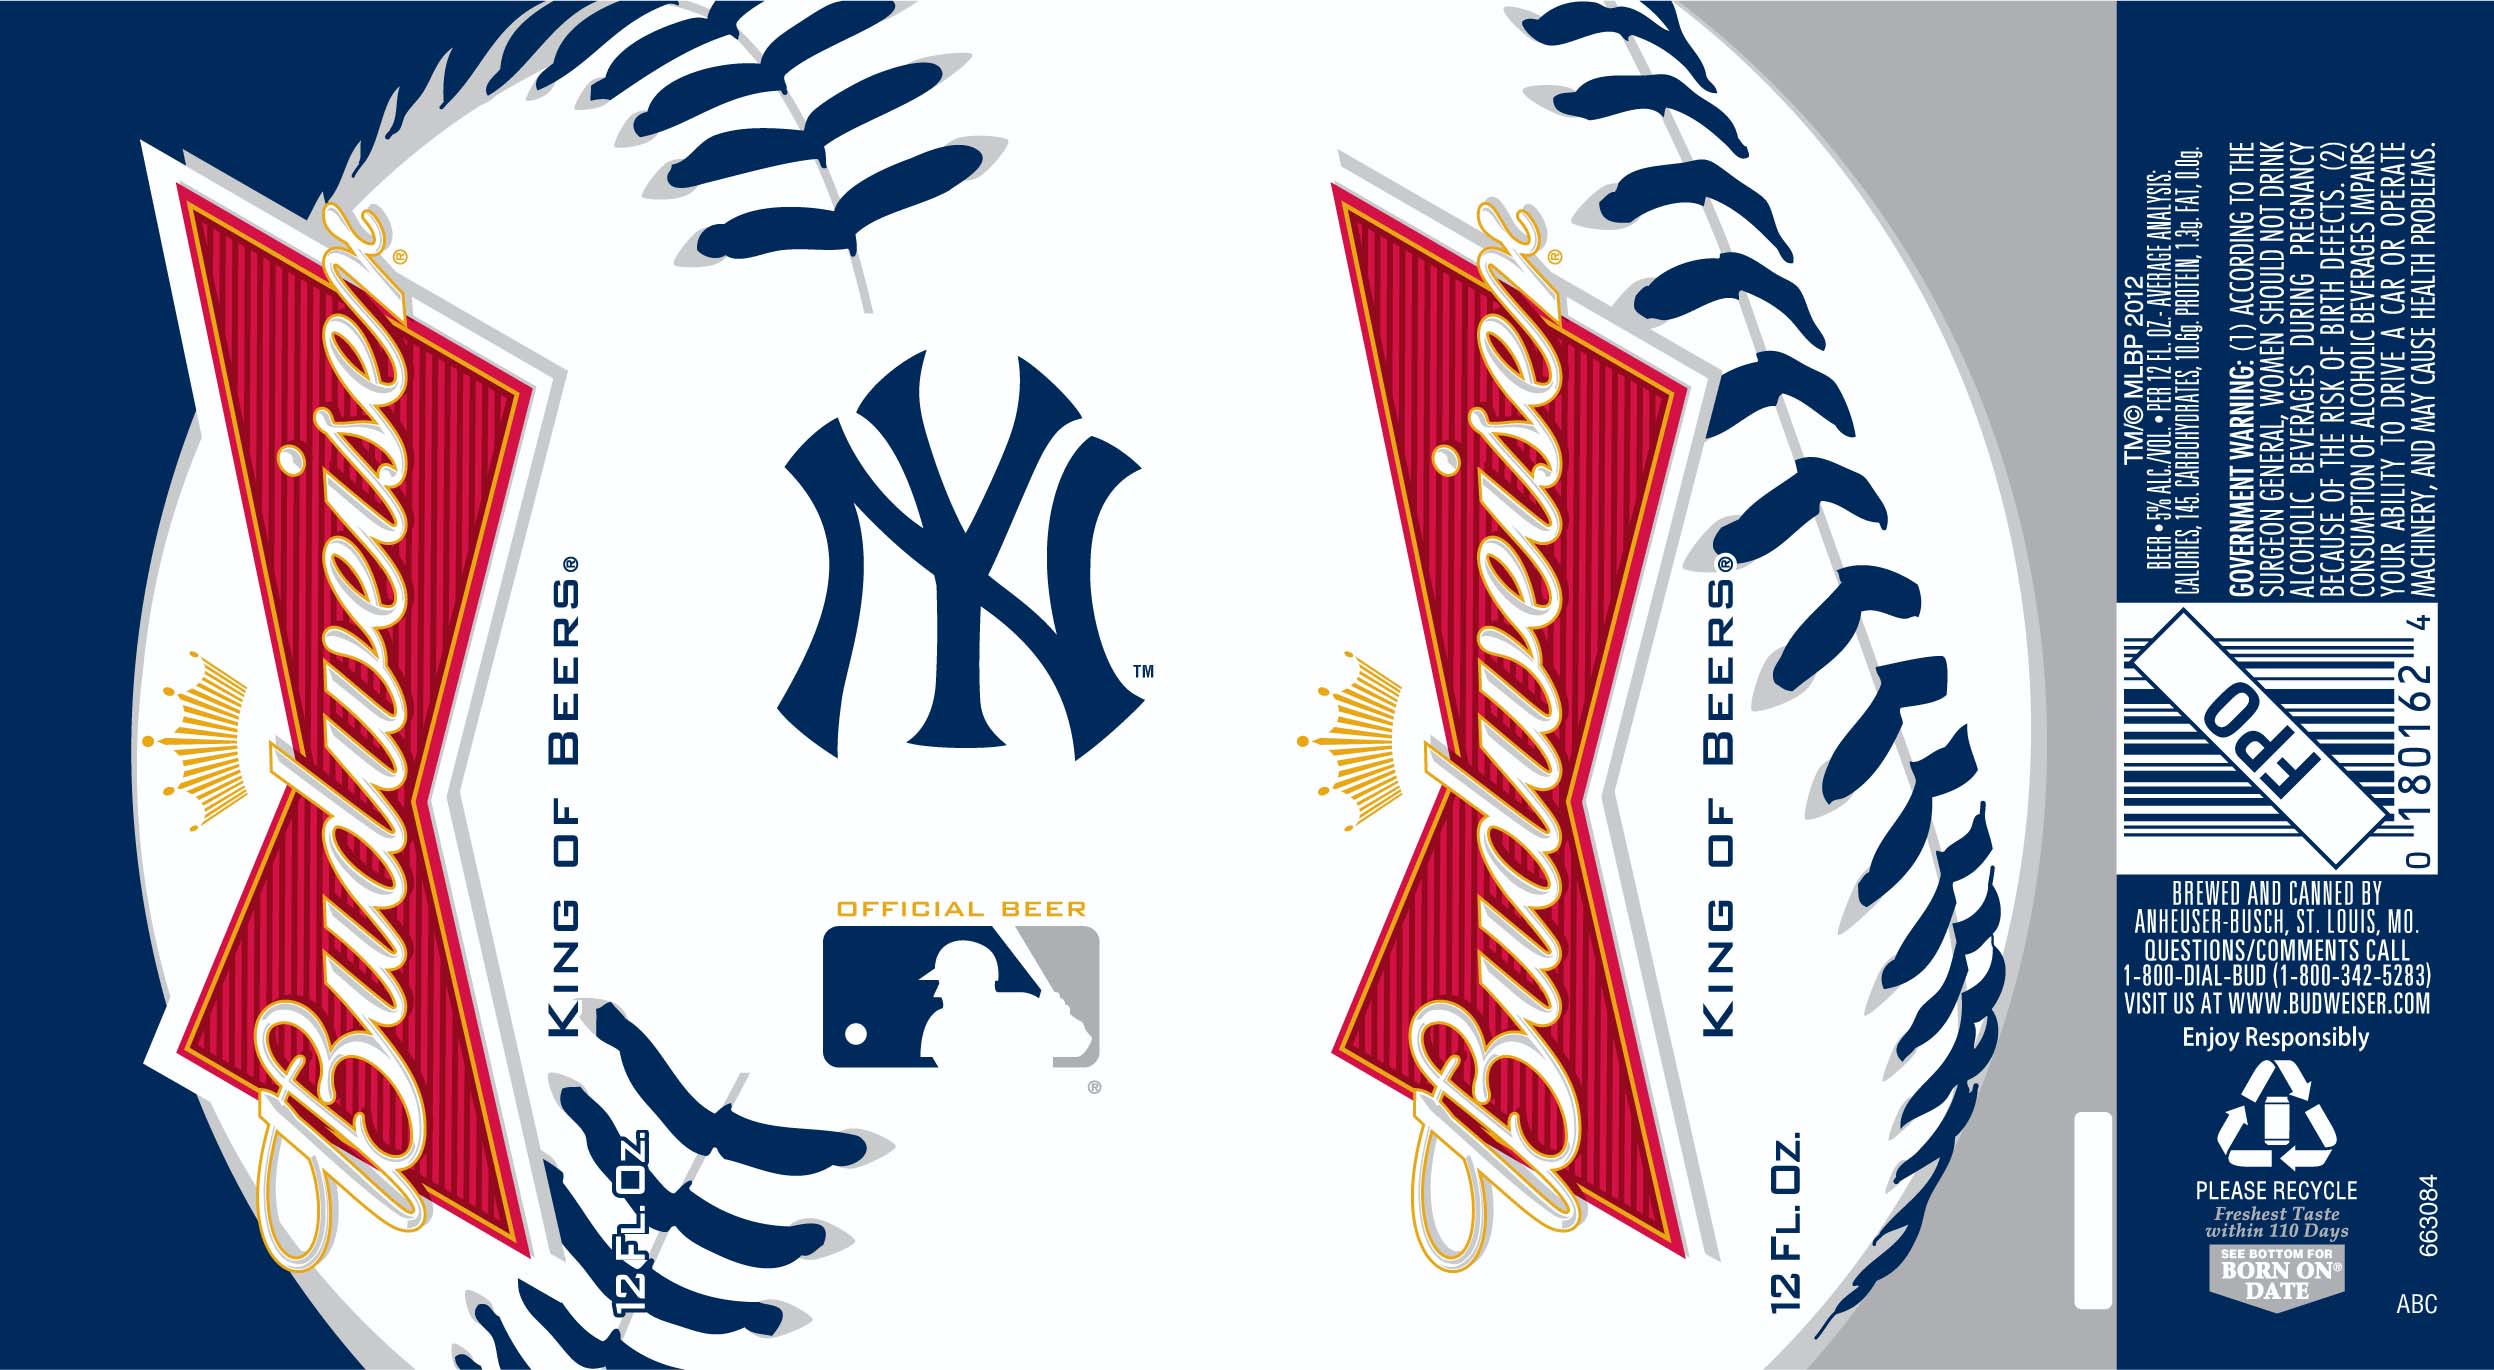 Budweiser Yankees